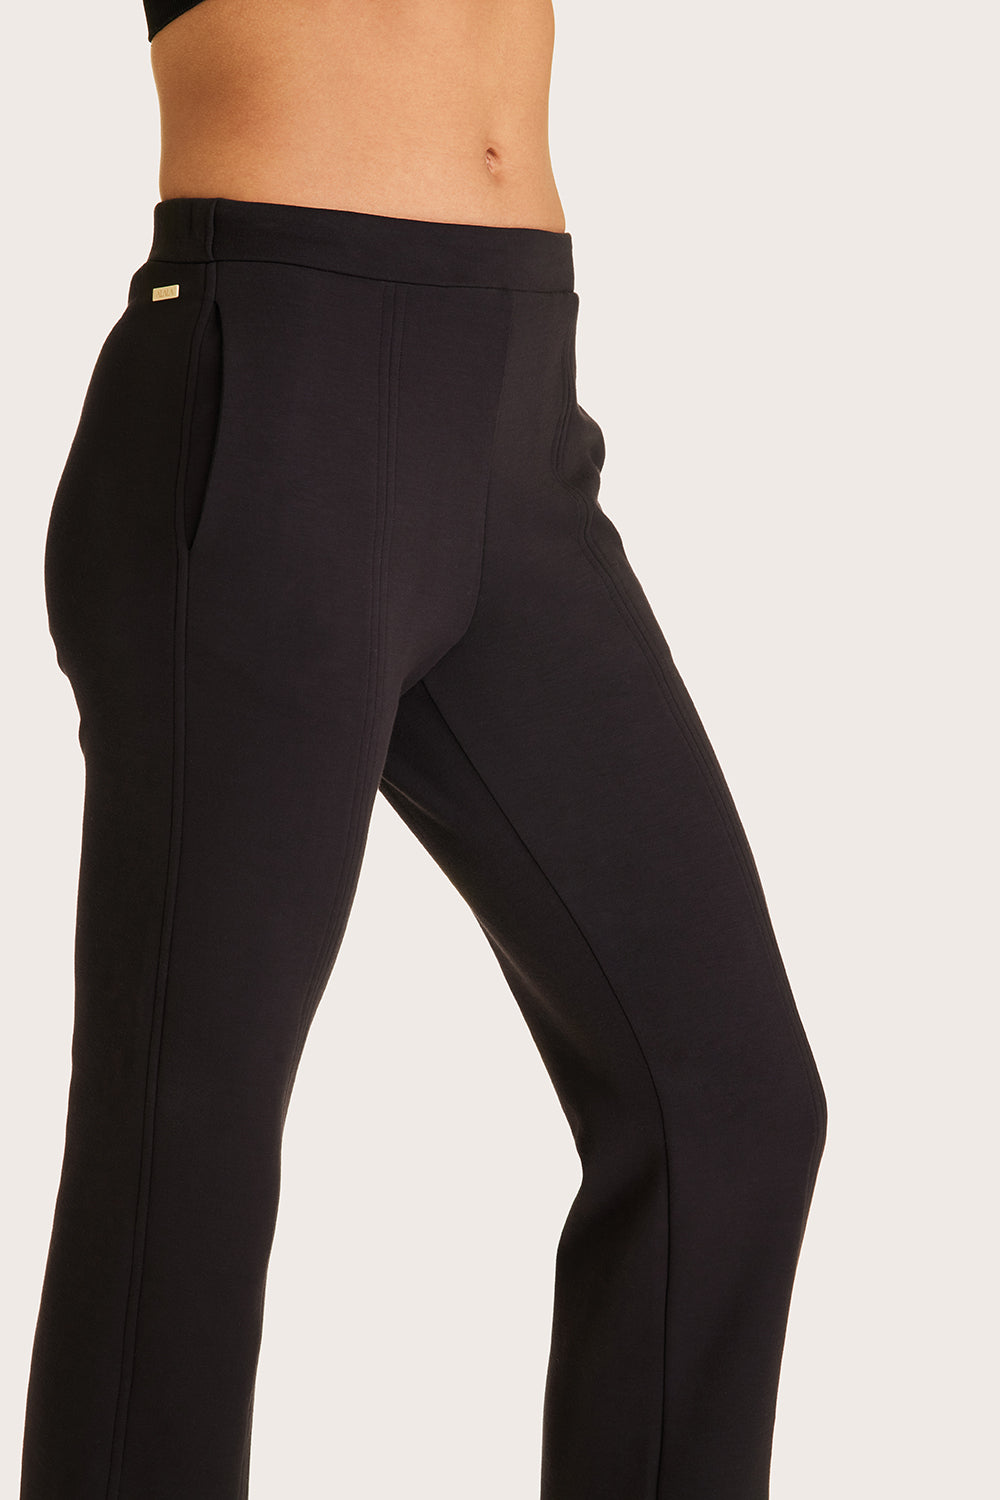 Alala women's soft crop pant in black